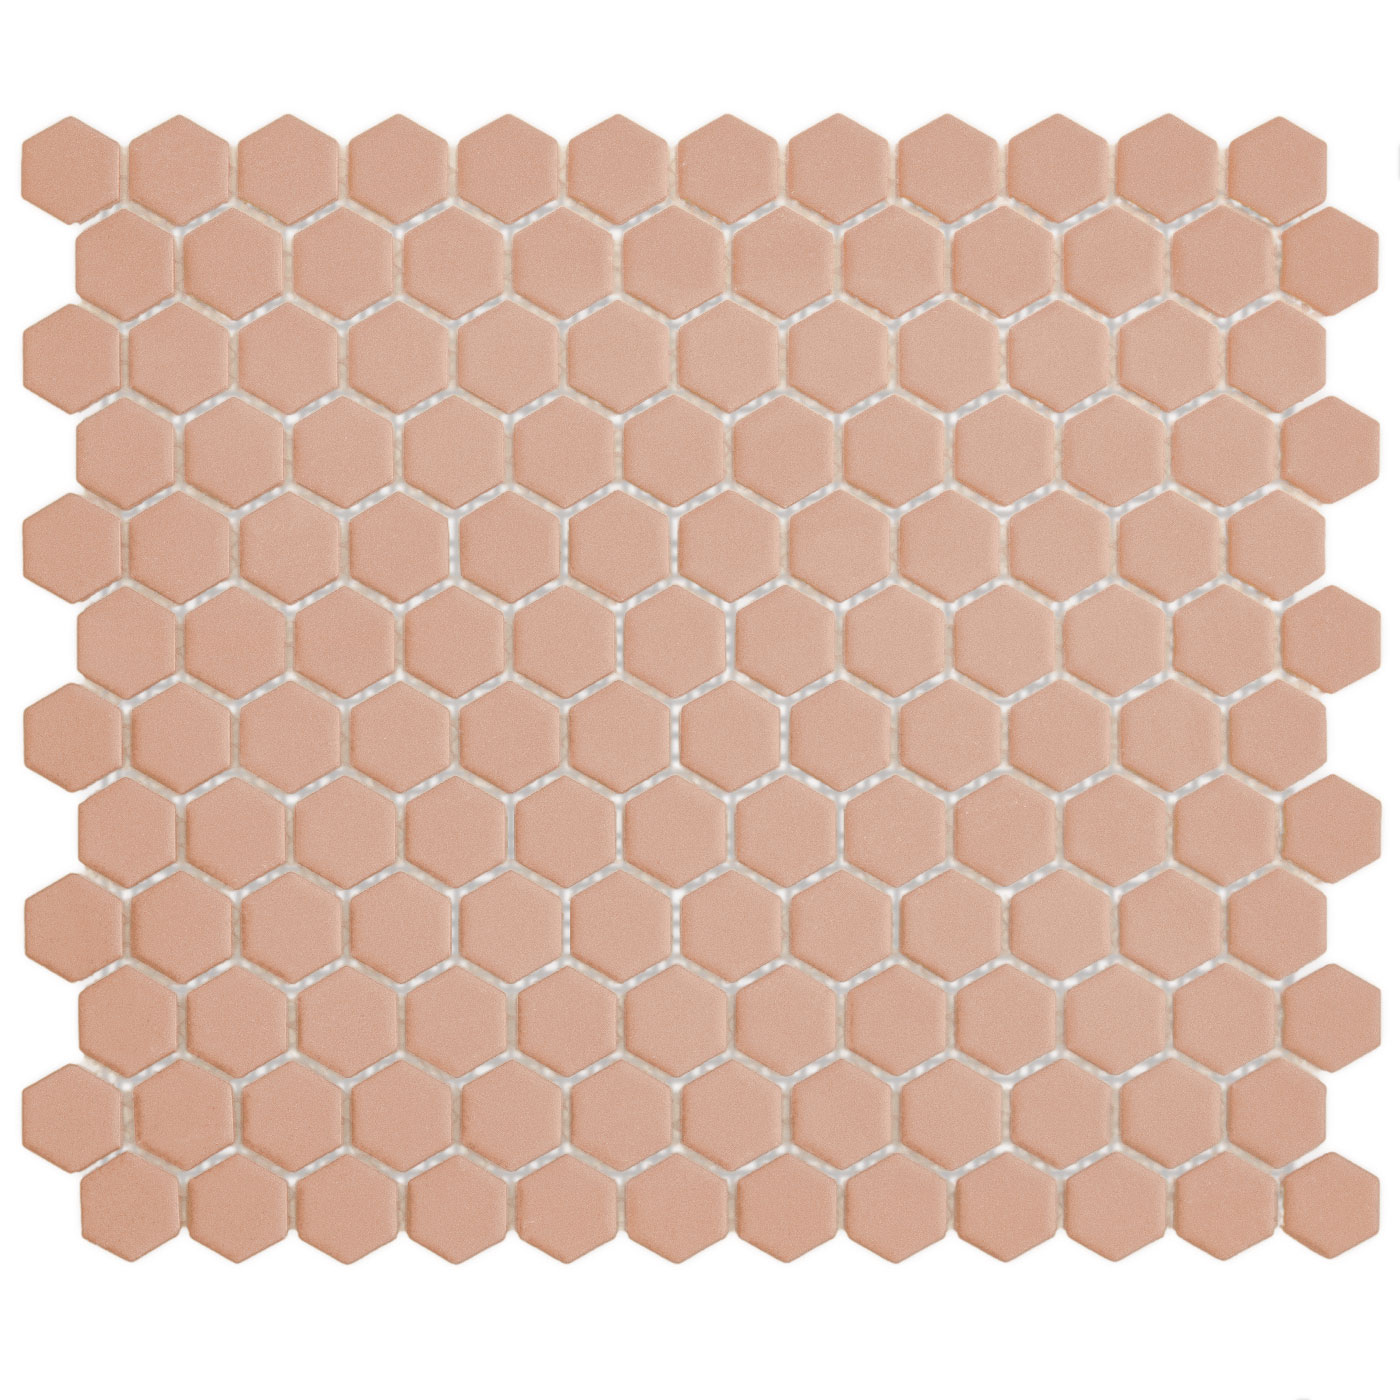 The Mosaic Factory Tegelsample:  Hexagon mozaïek tegels 23x26cm royal peach mat